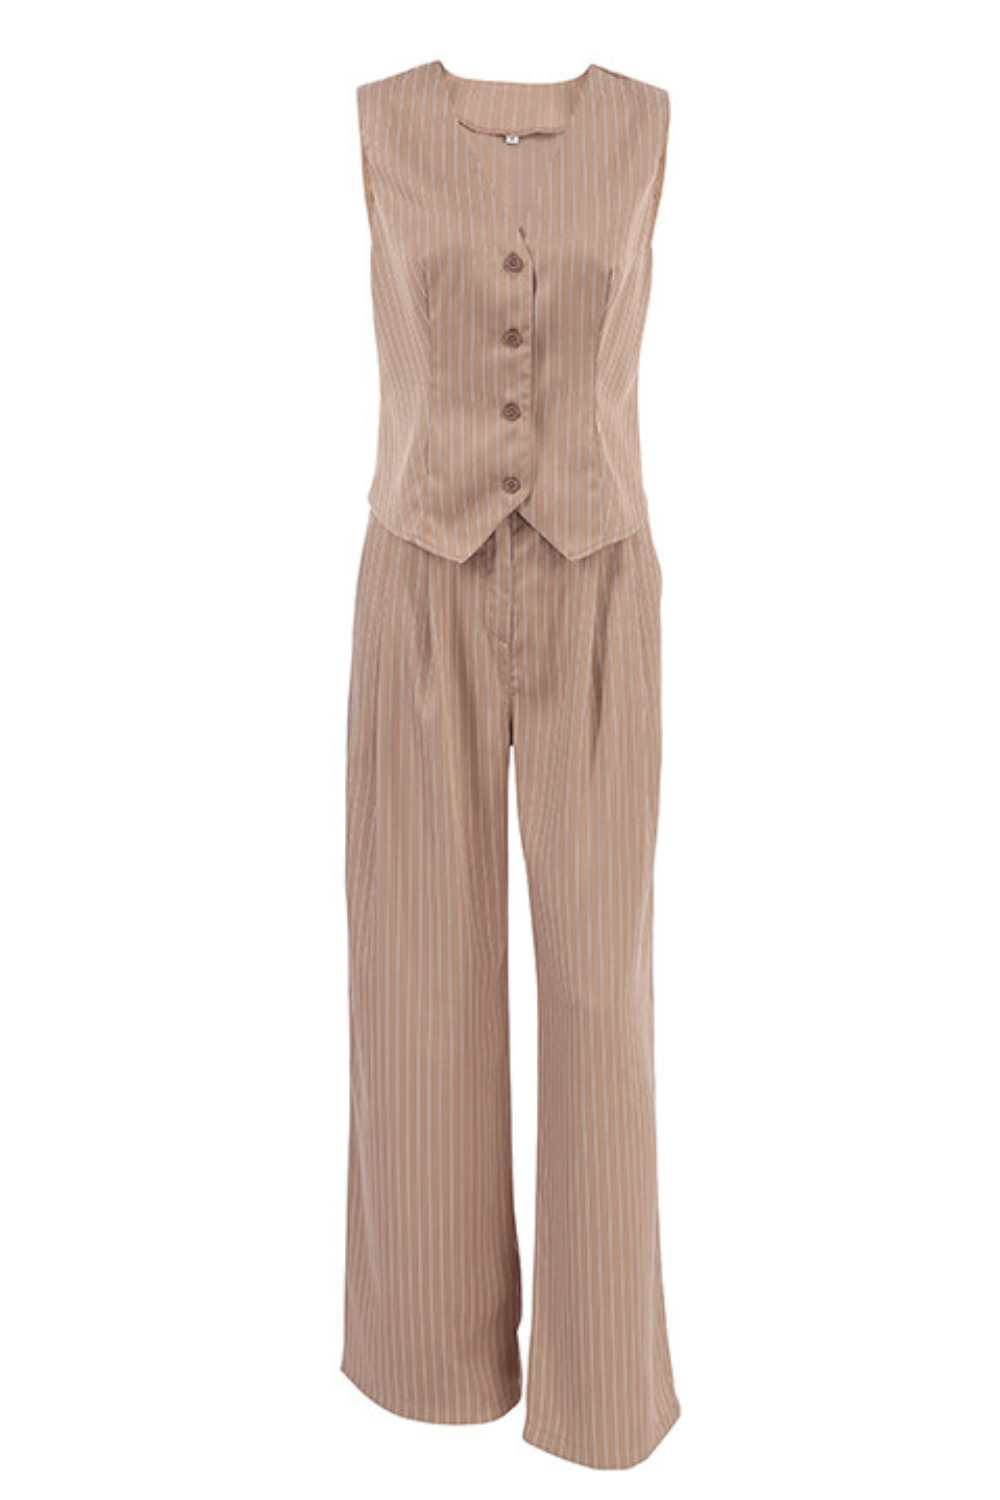 Women's Pinstripe Vest And Pants Set - A.A.Y FASHION